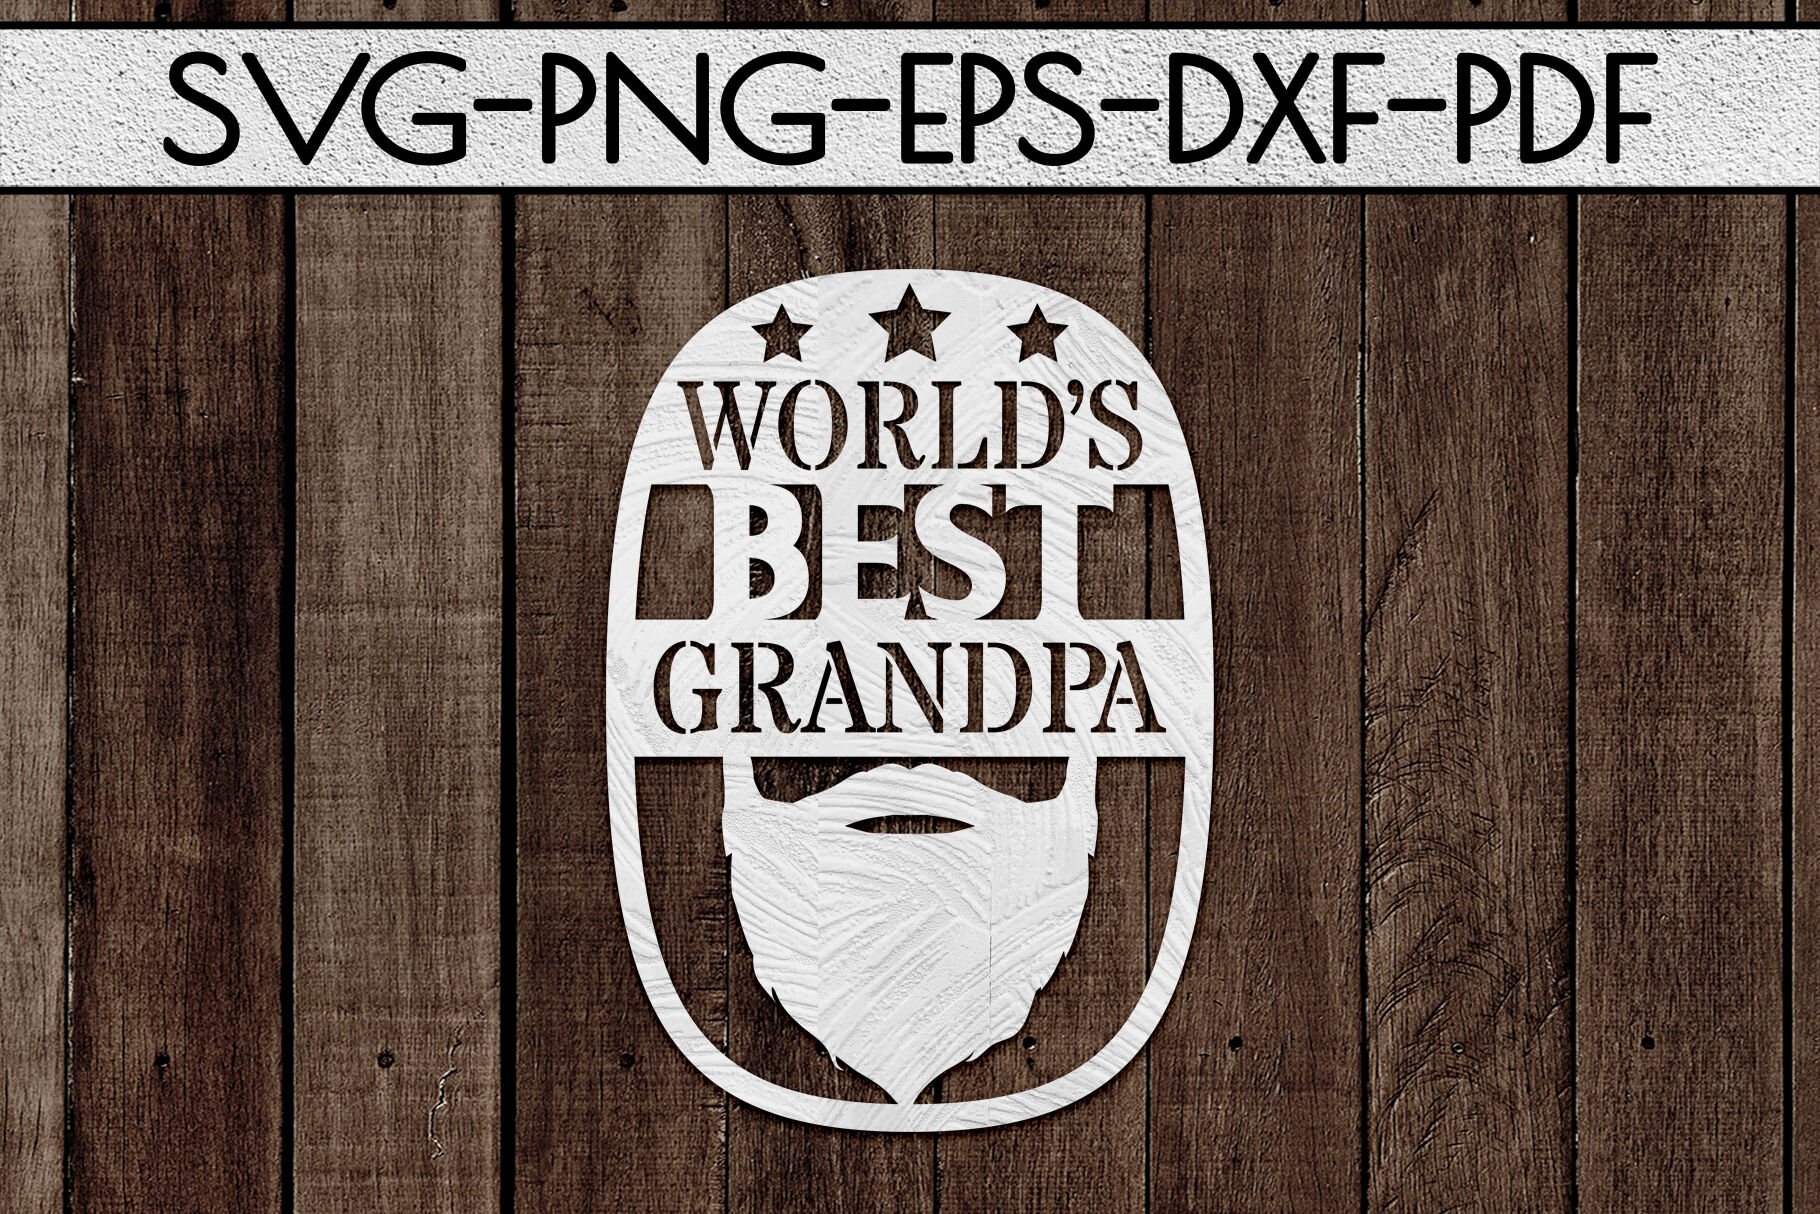 Free Free Best Grandpa By Par Svg 670 SVG PNG EPS DXF File